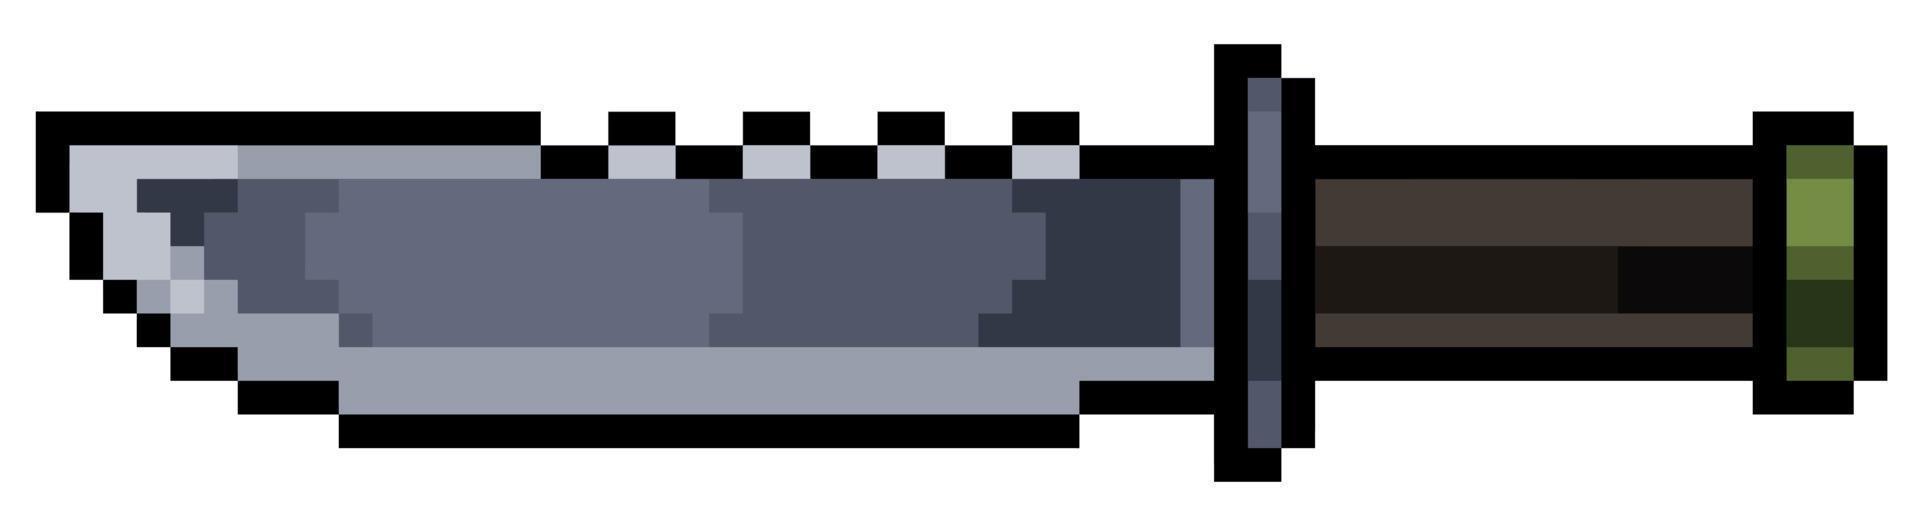 elemento de cuchillo de pixel art para juego de 8 bits sobre fondo blanco vector